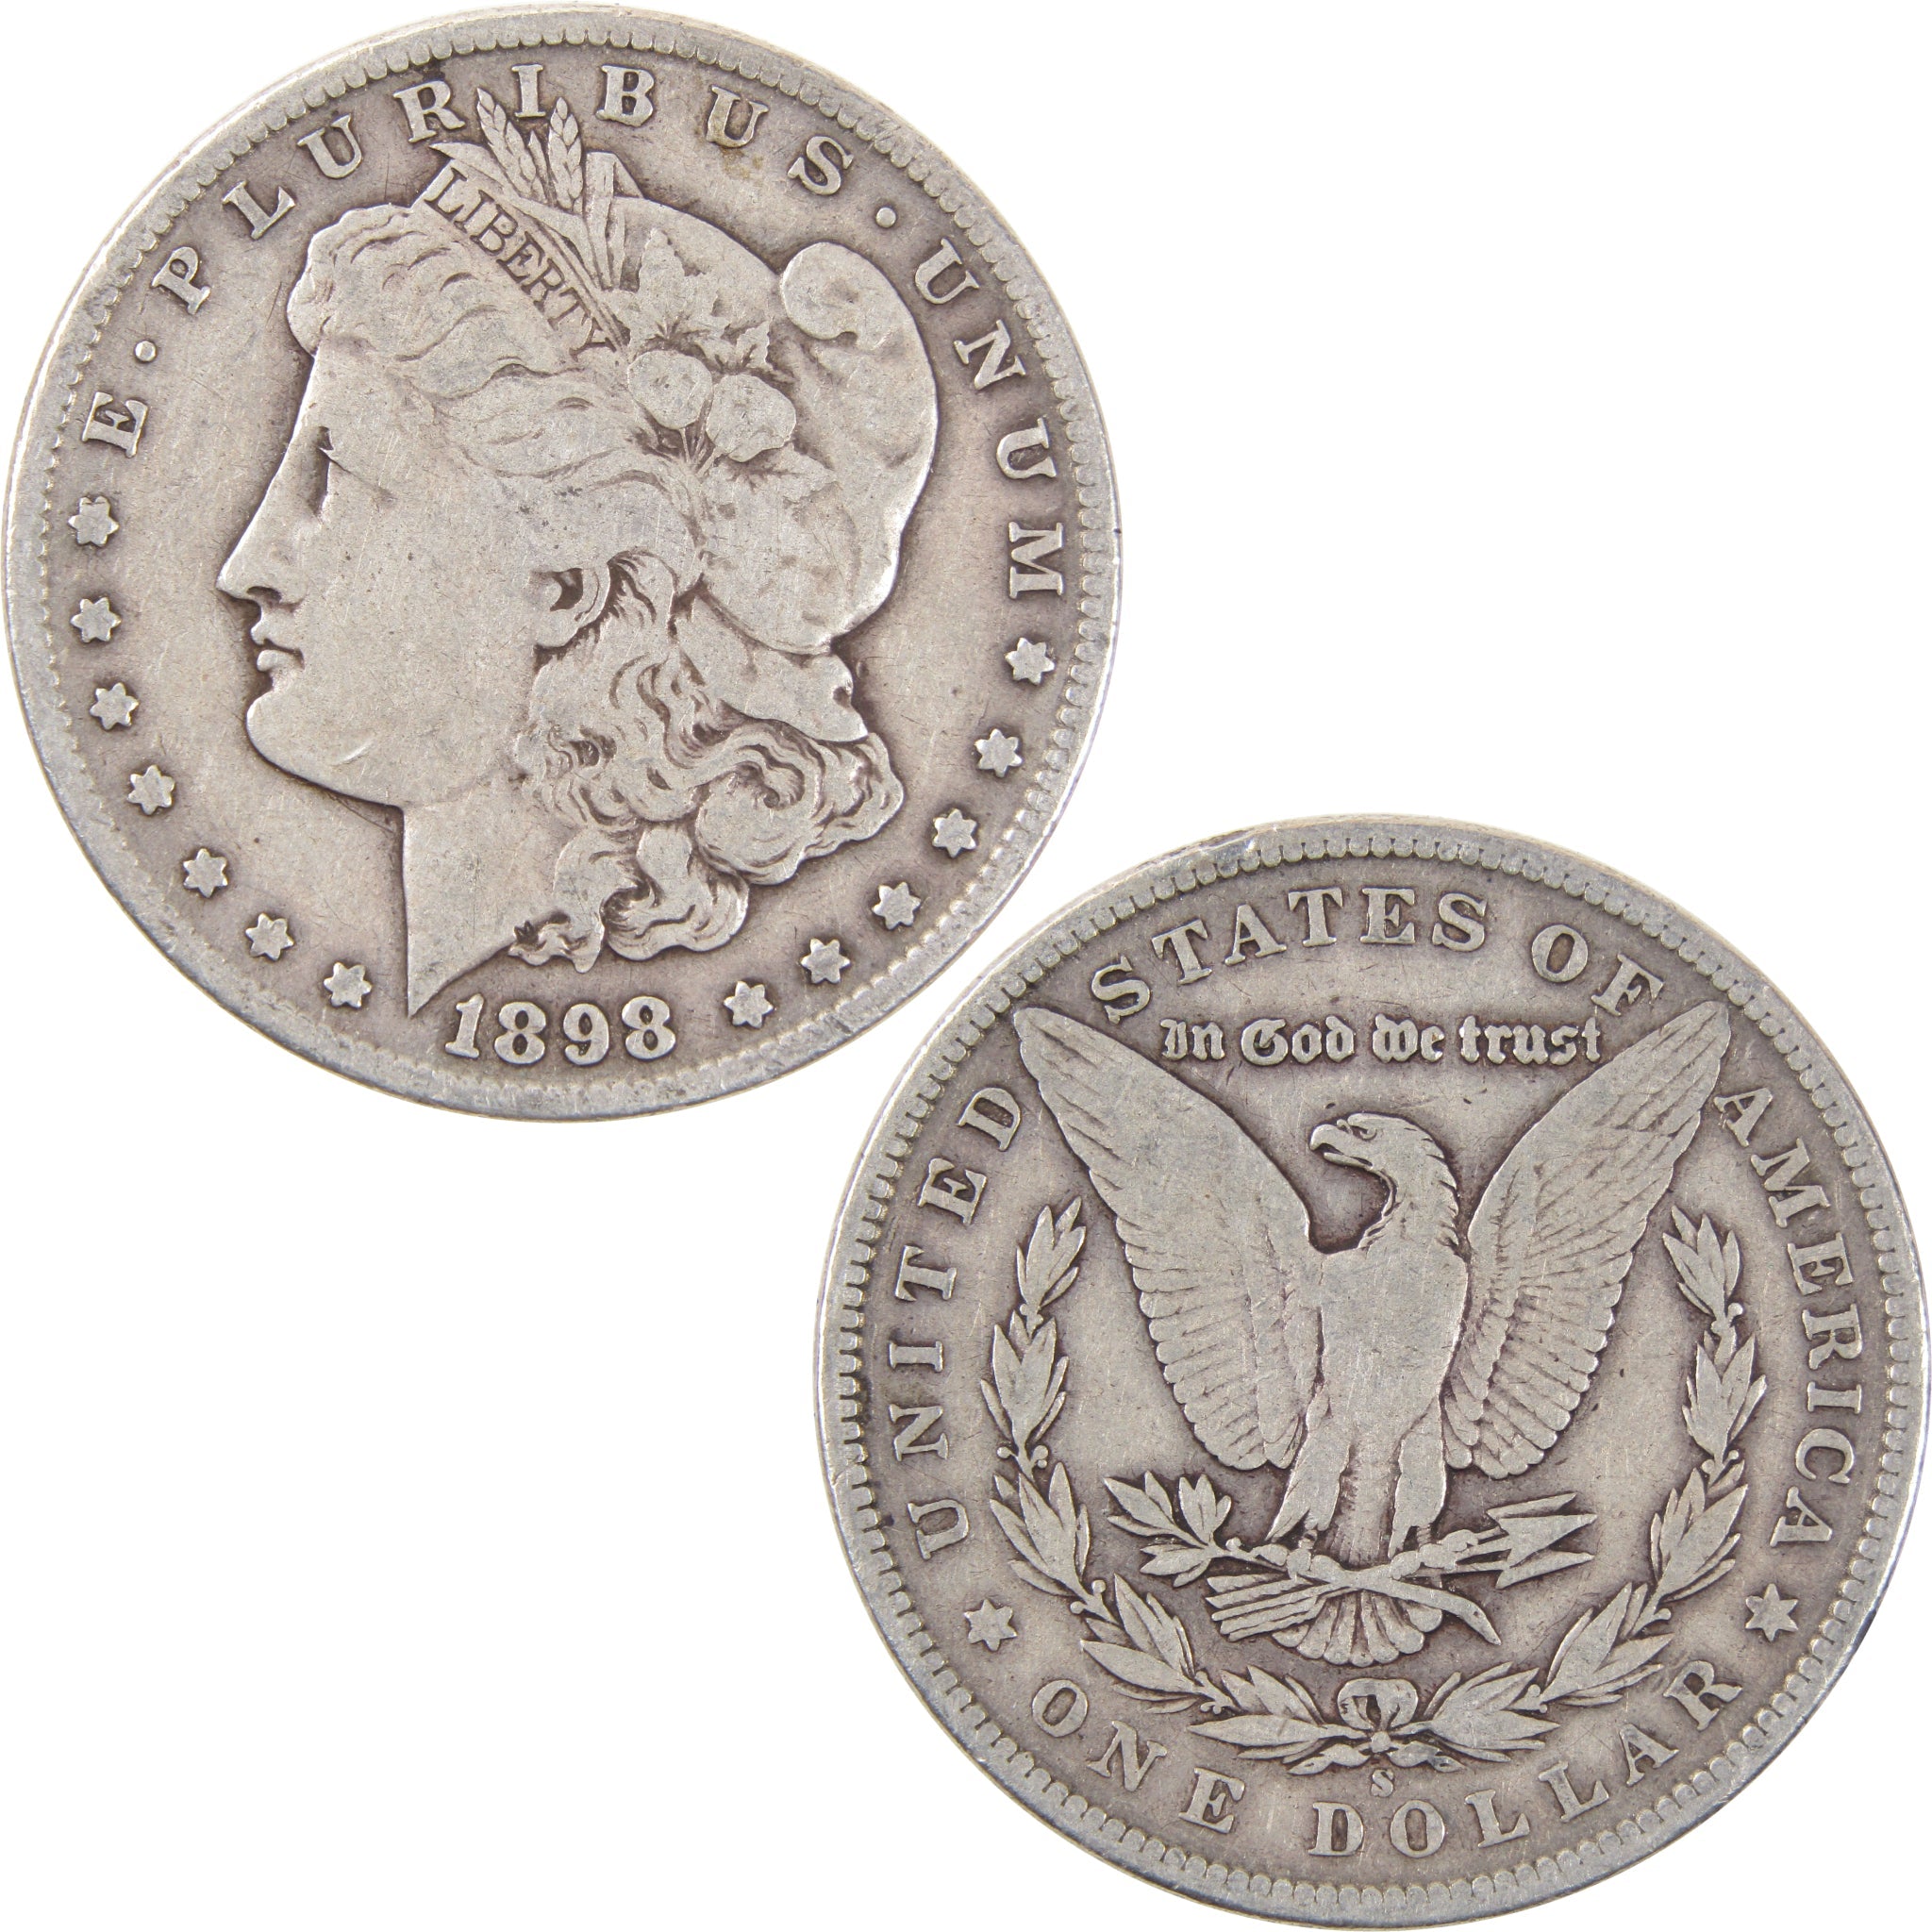 1898 S Morgan Dollar VG Very Good 90% Silver US Coin SKU:I2539 - Morgan coin - Morgan silver dollar - Morgan silver dollar for sale - Profile Coins &amp; Collectibles